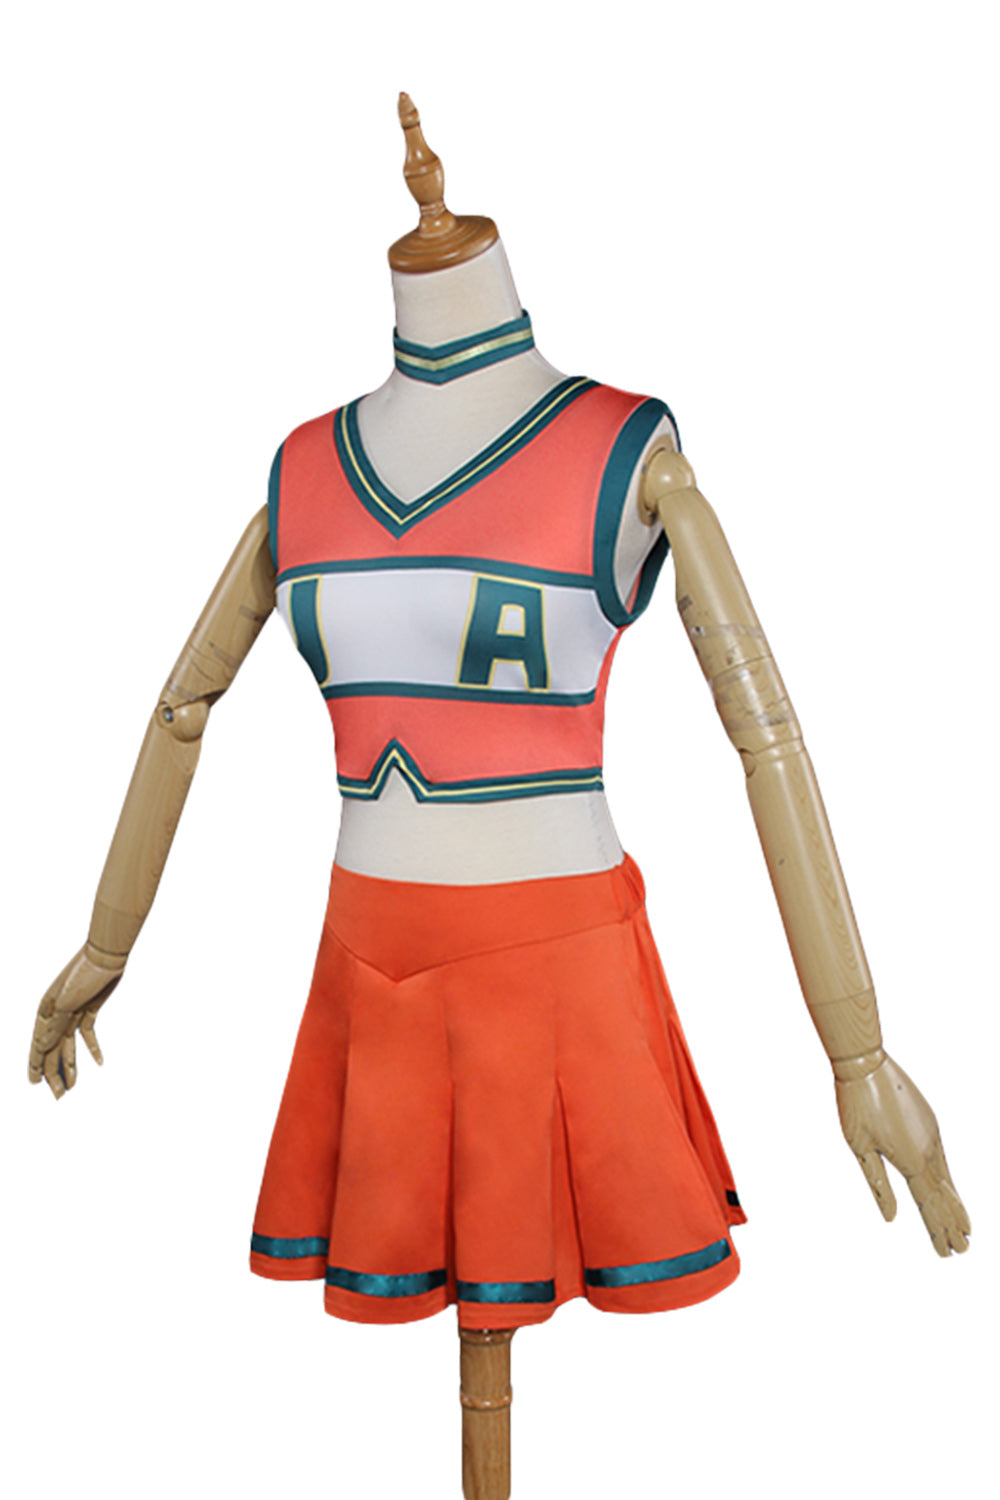 Boku no Hero Academia Pom-pom girl Cosplay Costume